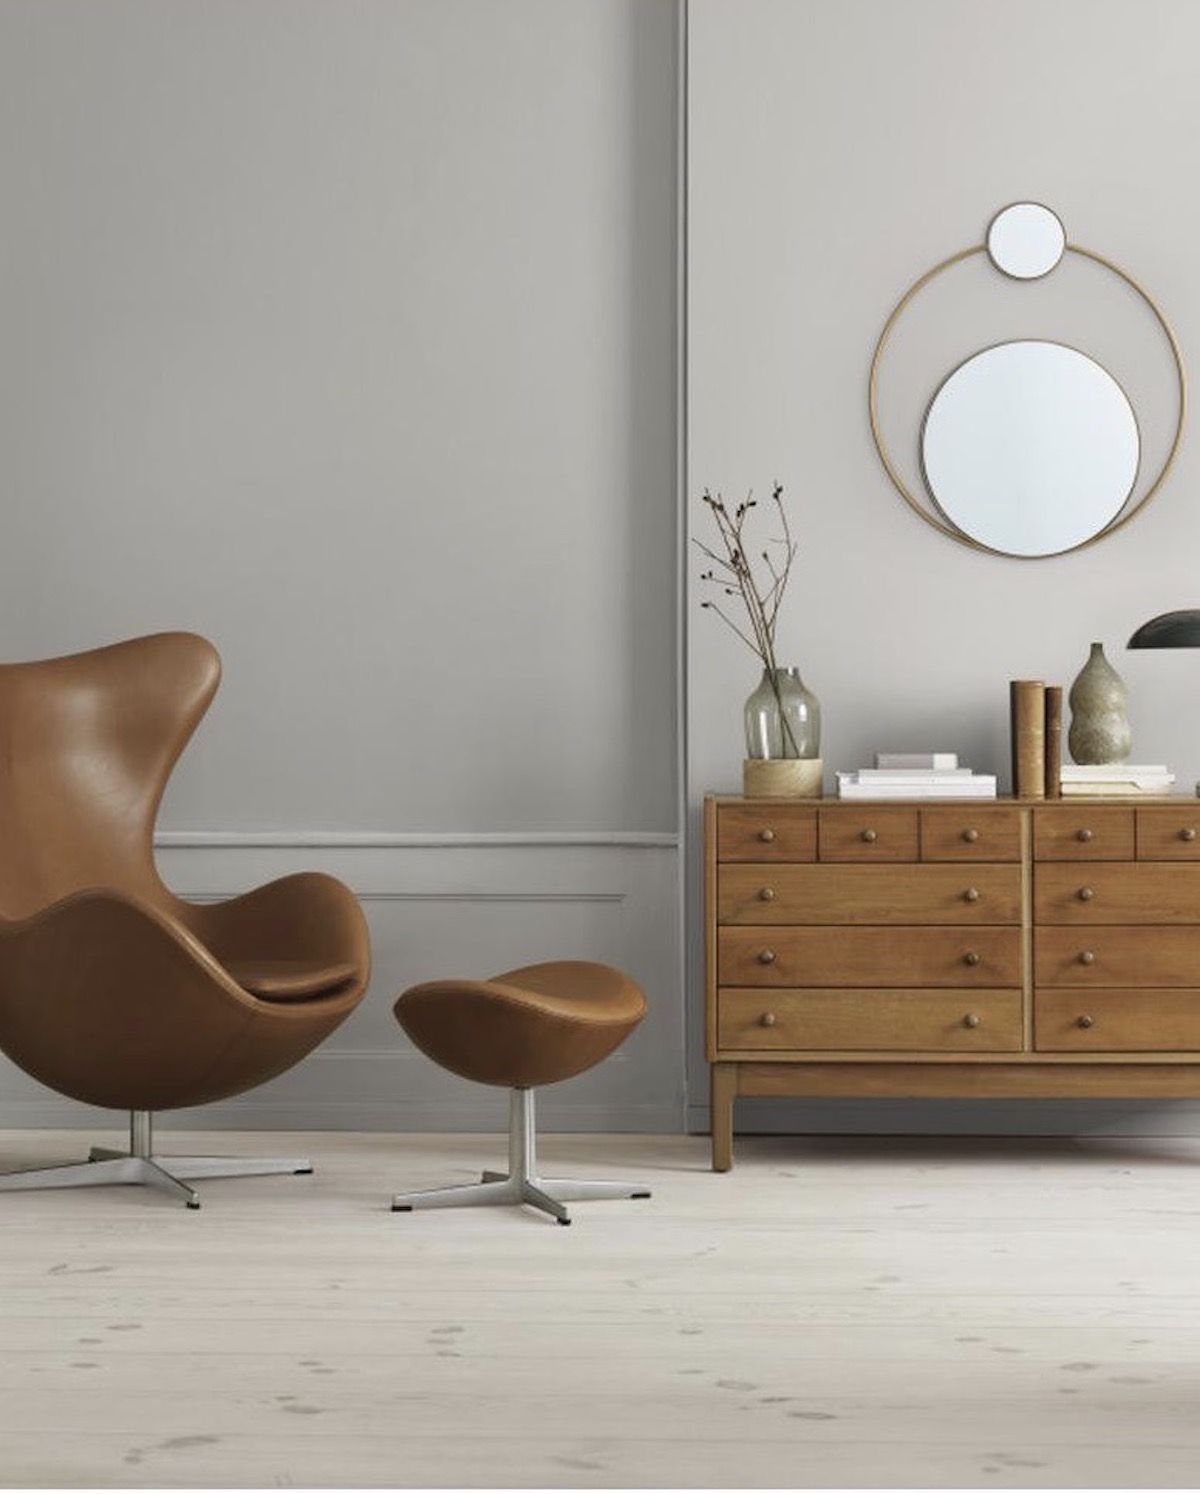 meubles tendance miroir rond or meuble bois fauteuil egg - blog déco - clemaroundthecorner